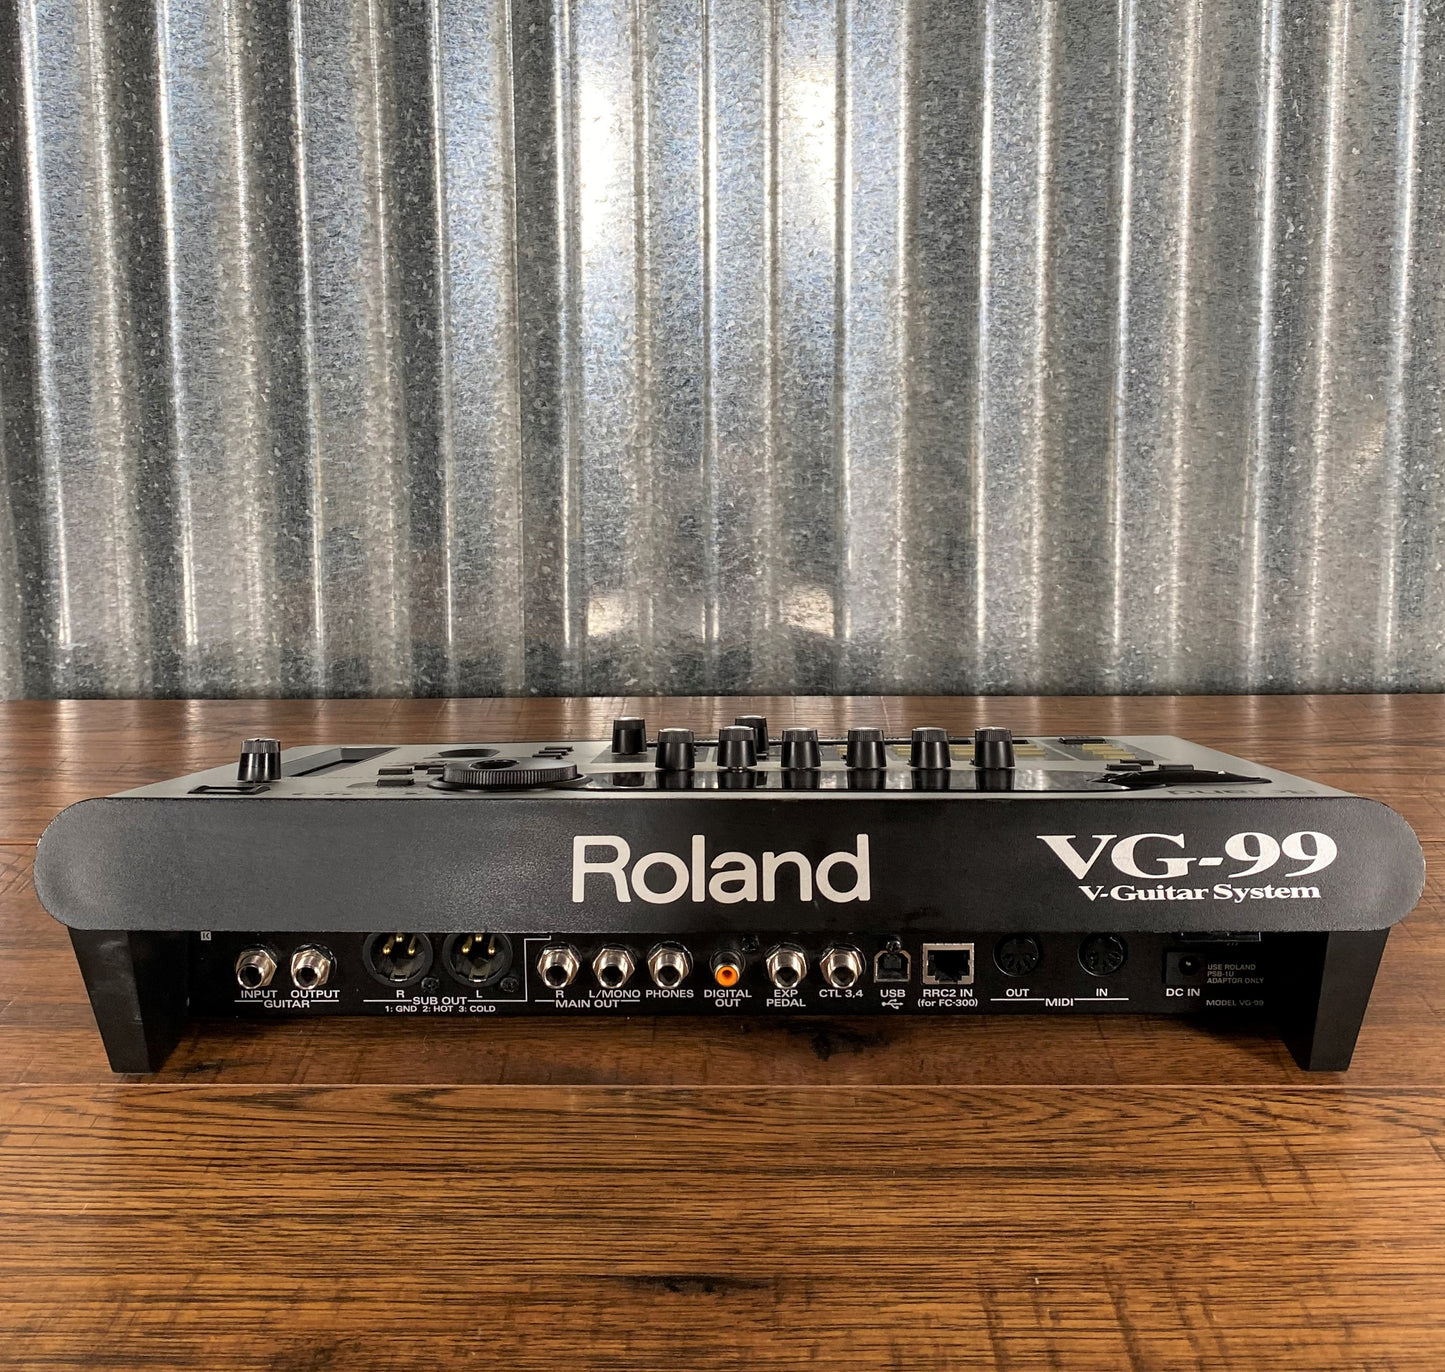 Roland VG-99 Guitar Effect Modeling System Used